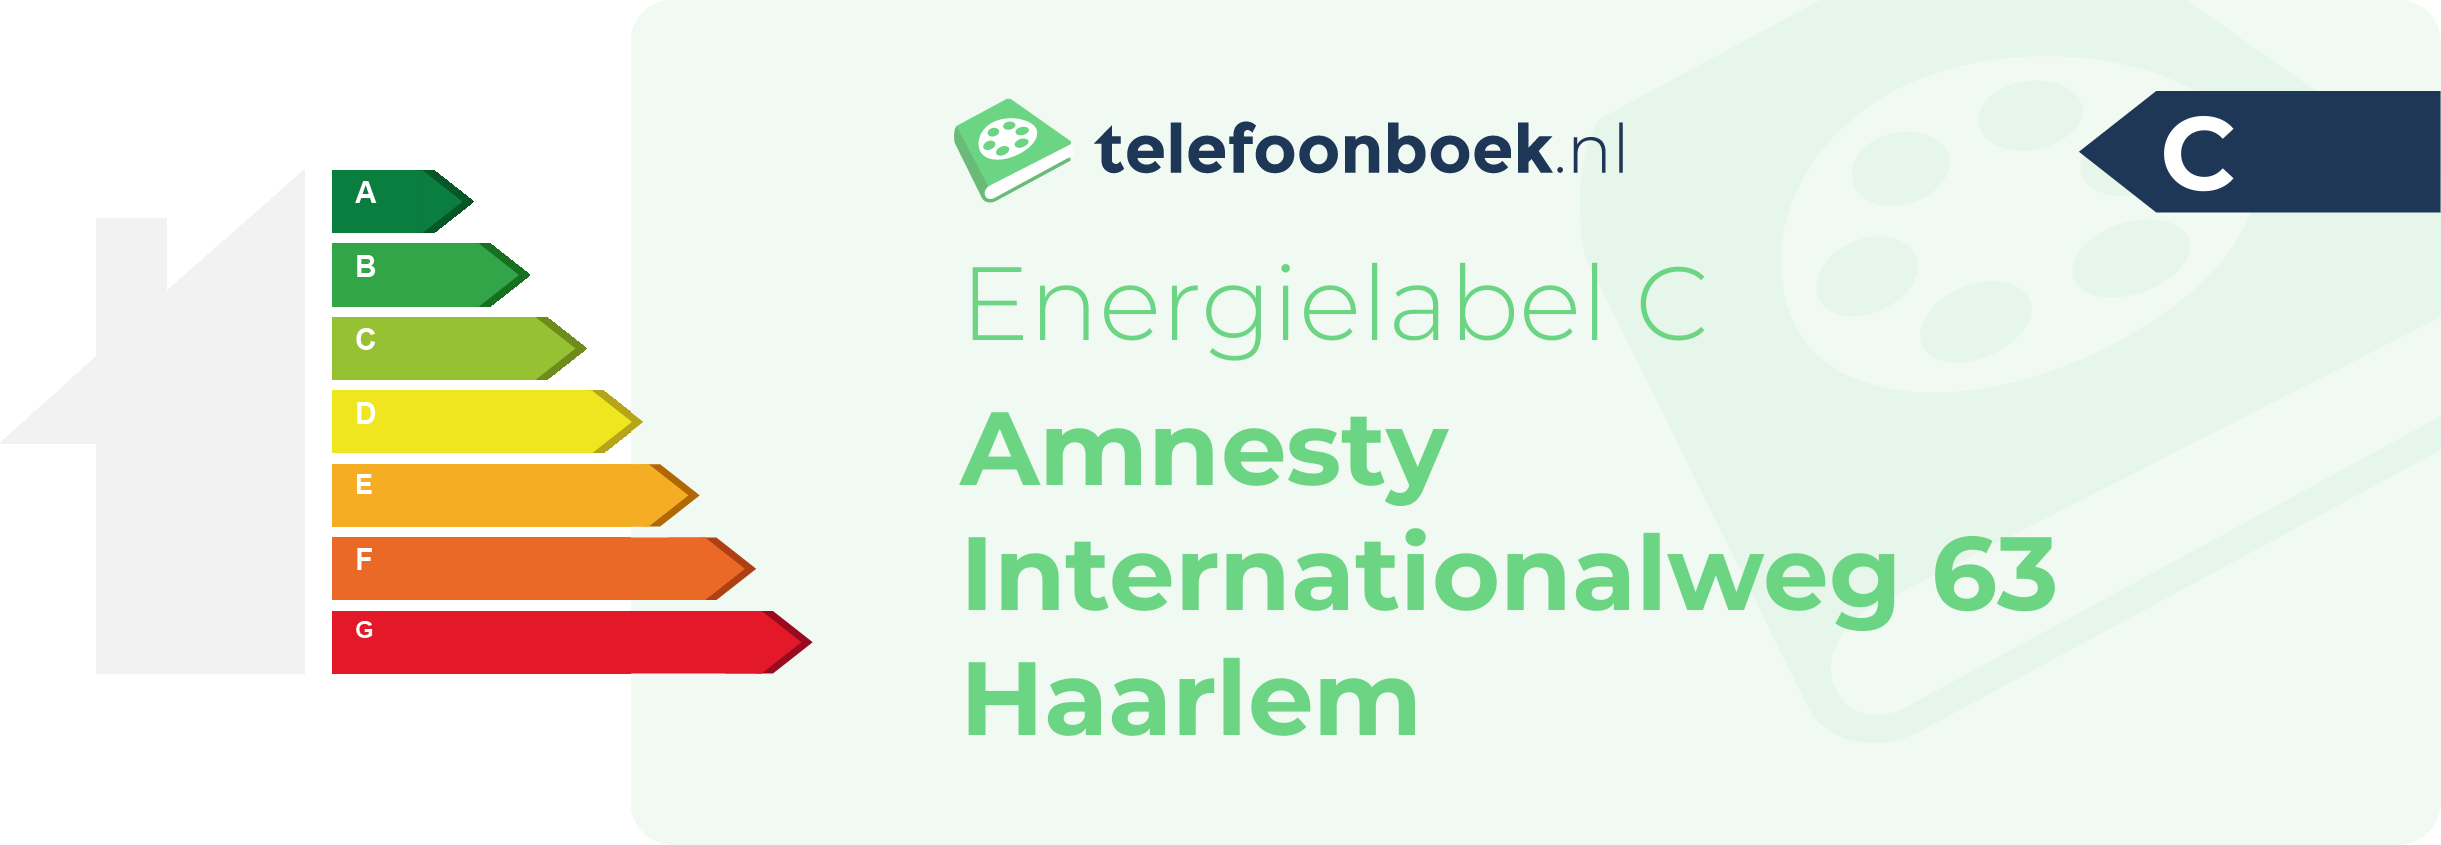 Energielabel Amnesty Internationalweg 63 Haarlem